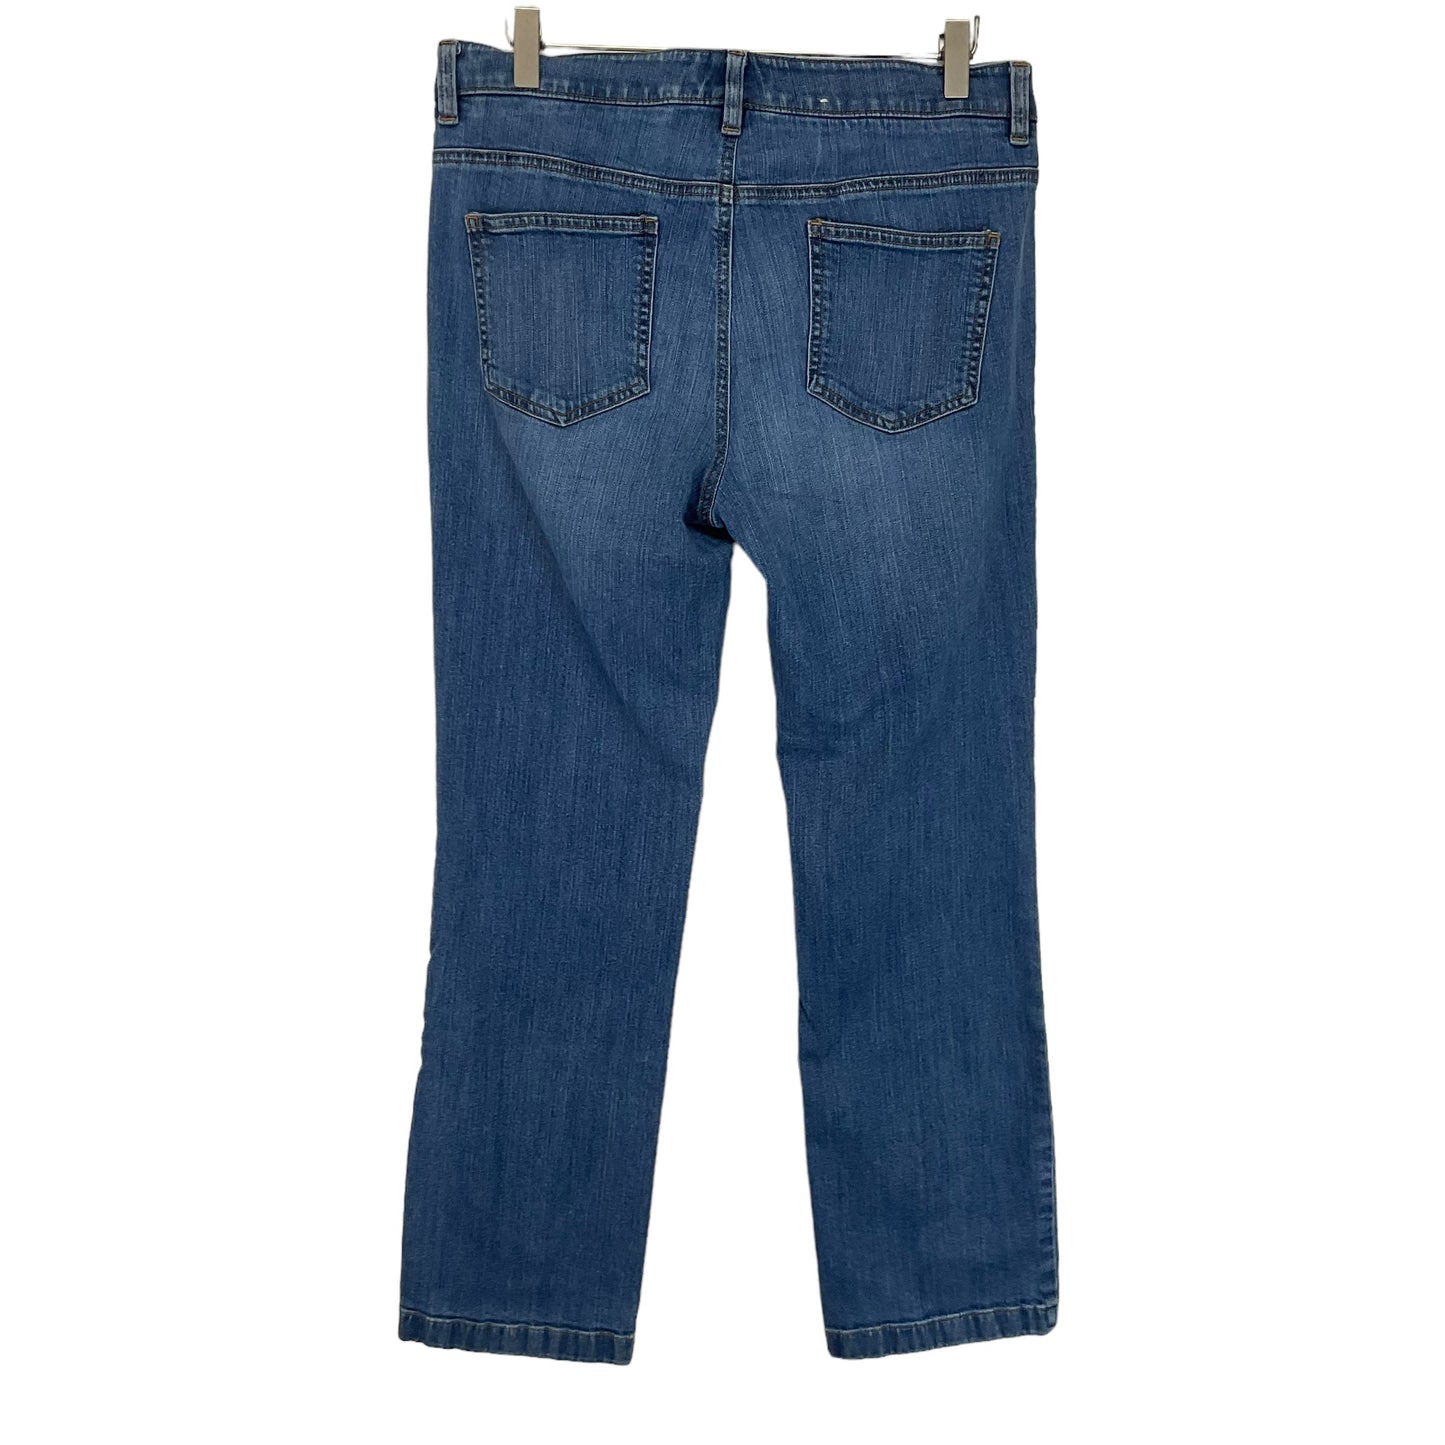 Blue Denim Jeans Straight Jones New York, Size 8